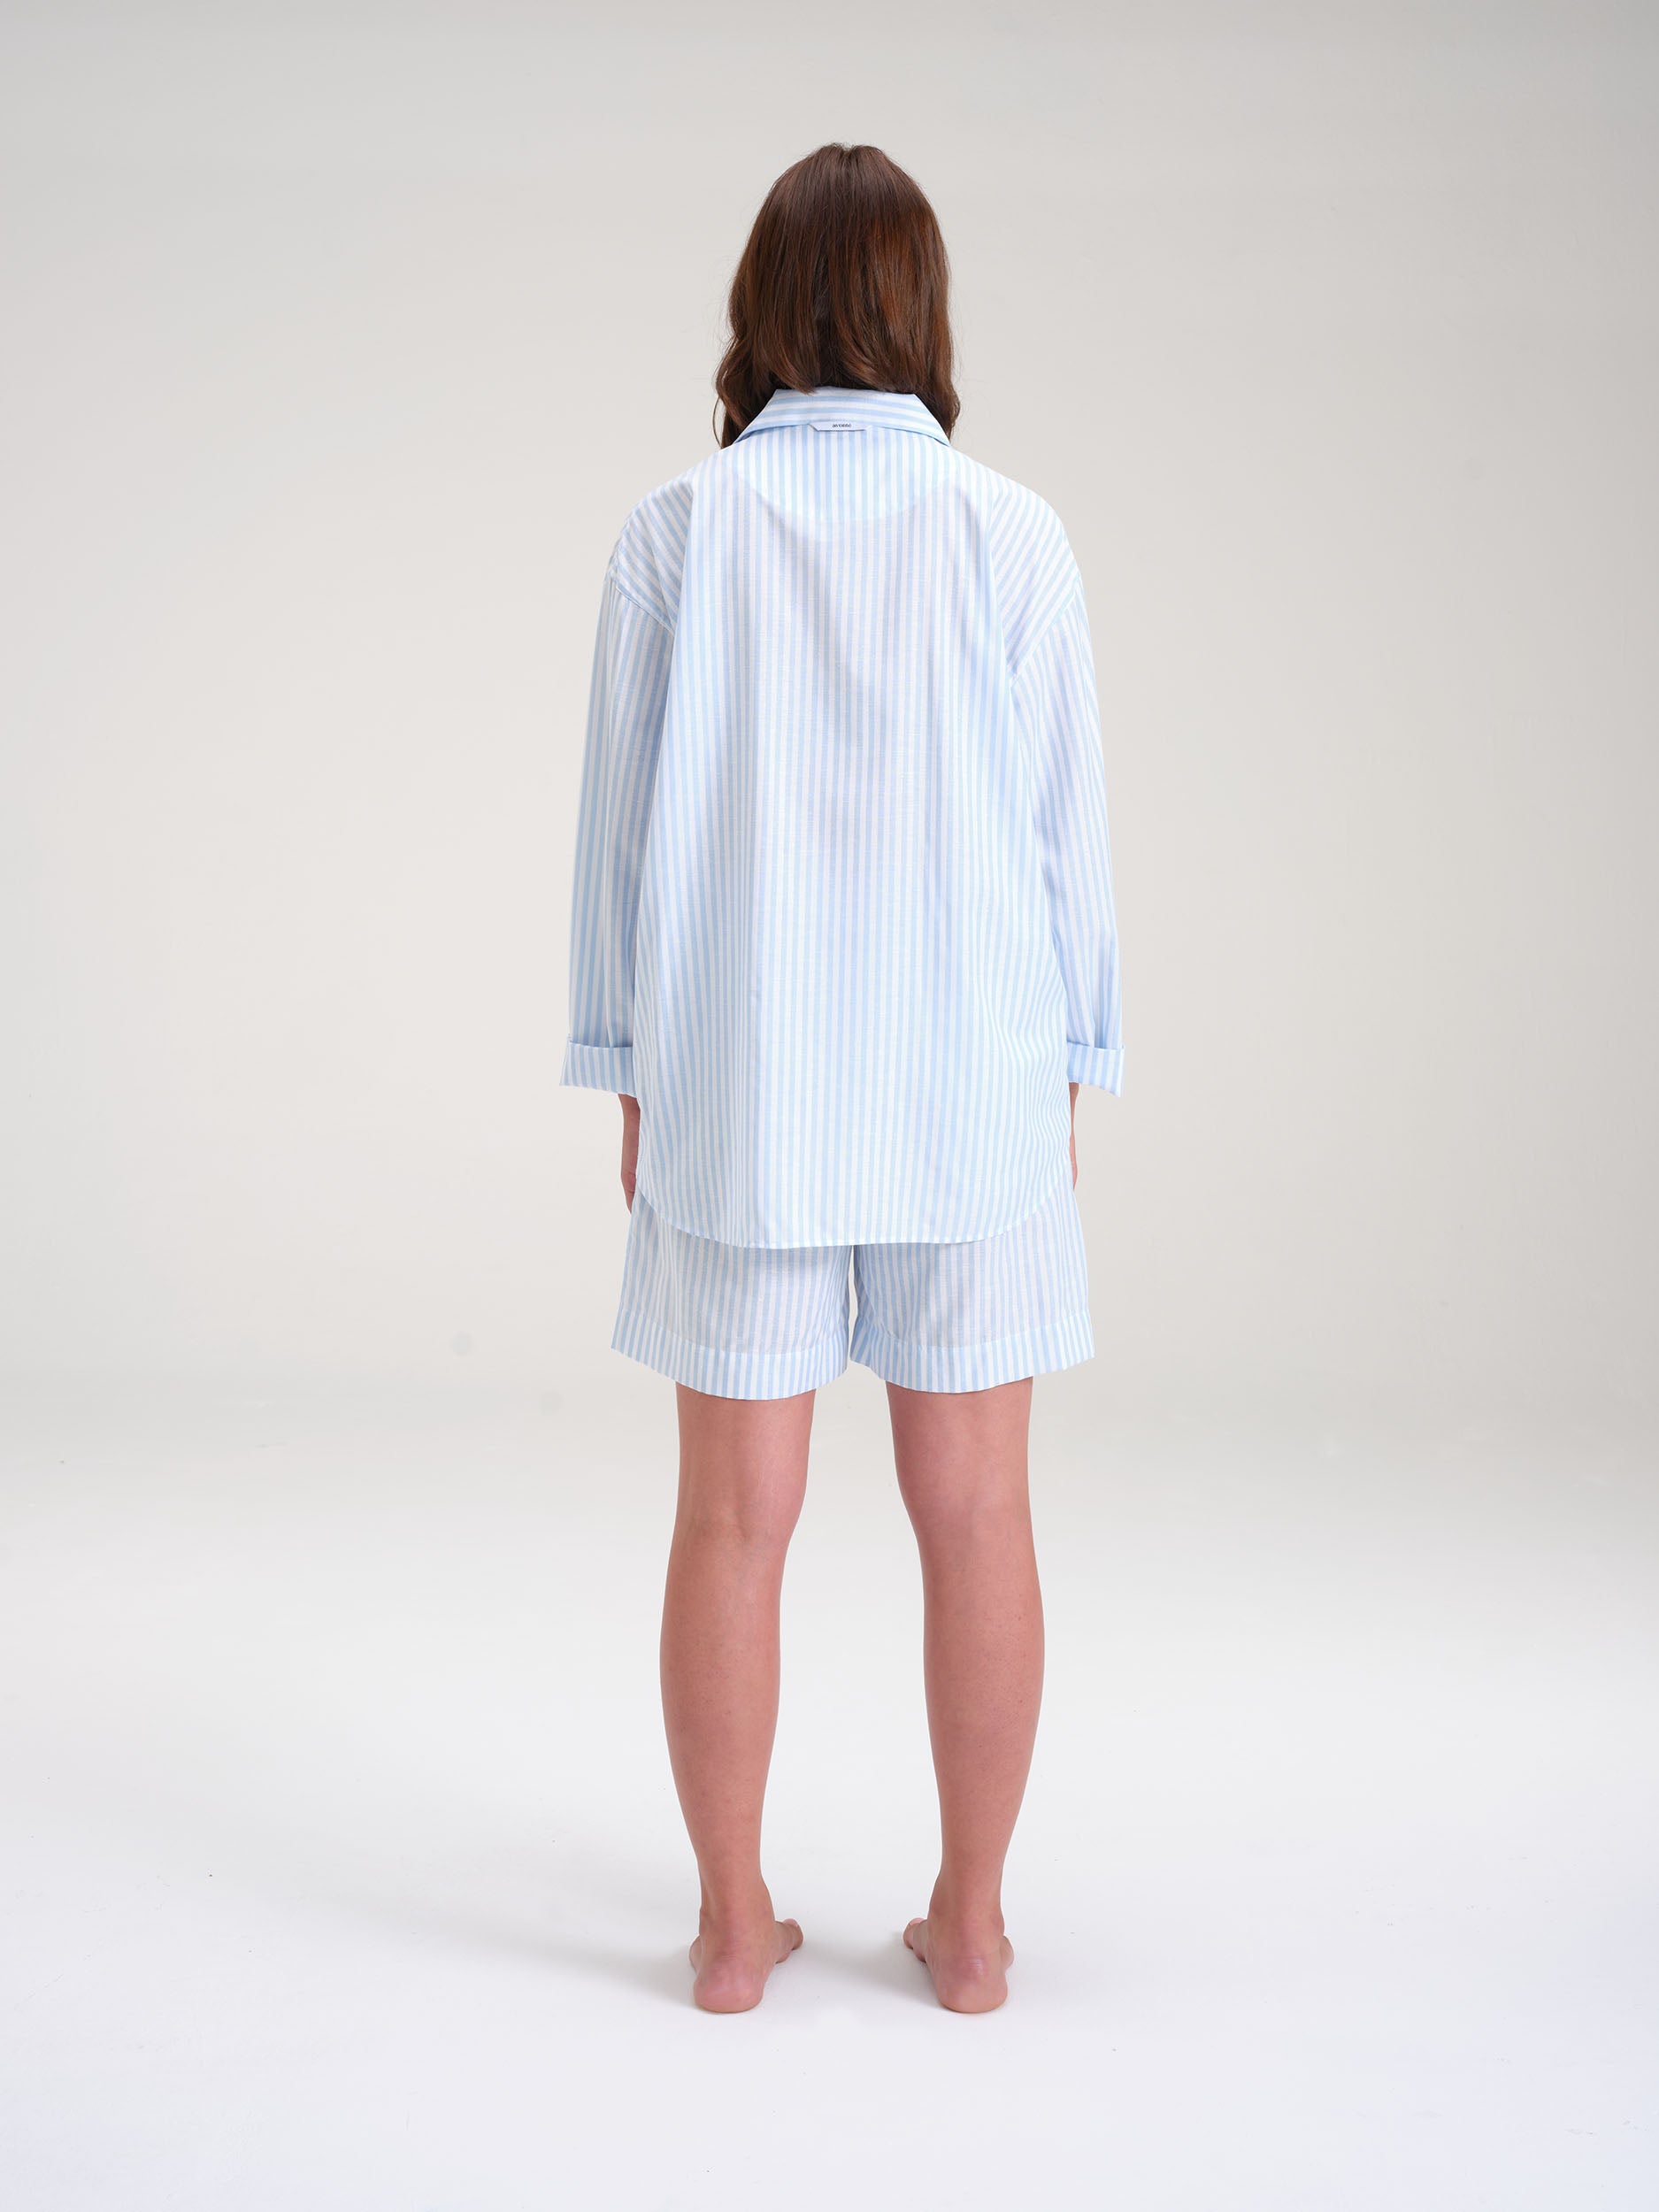 Pyjama Set (Shirt+ Shorts) - golden clouds stripe